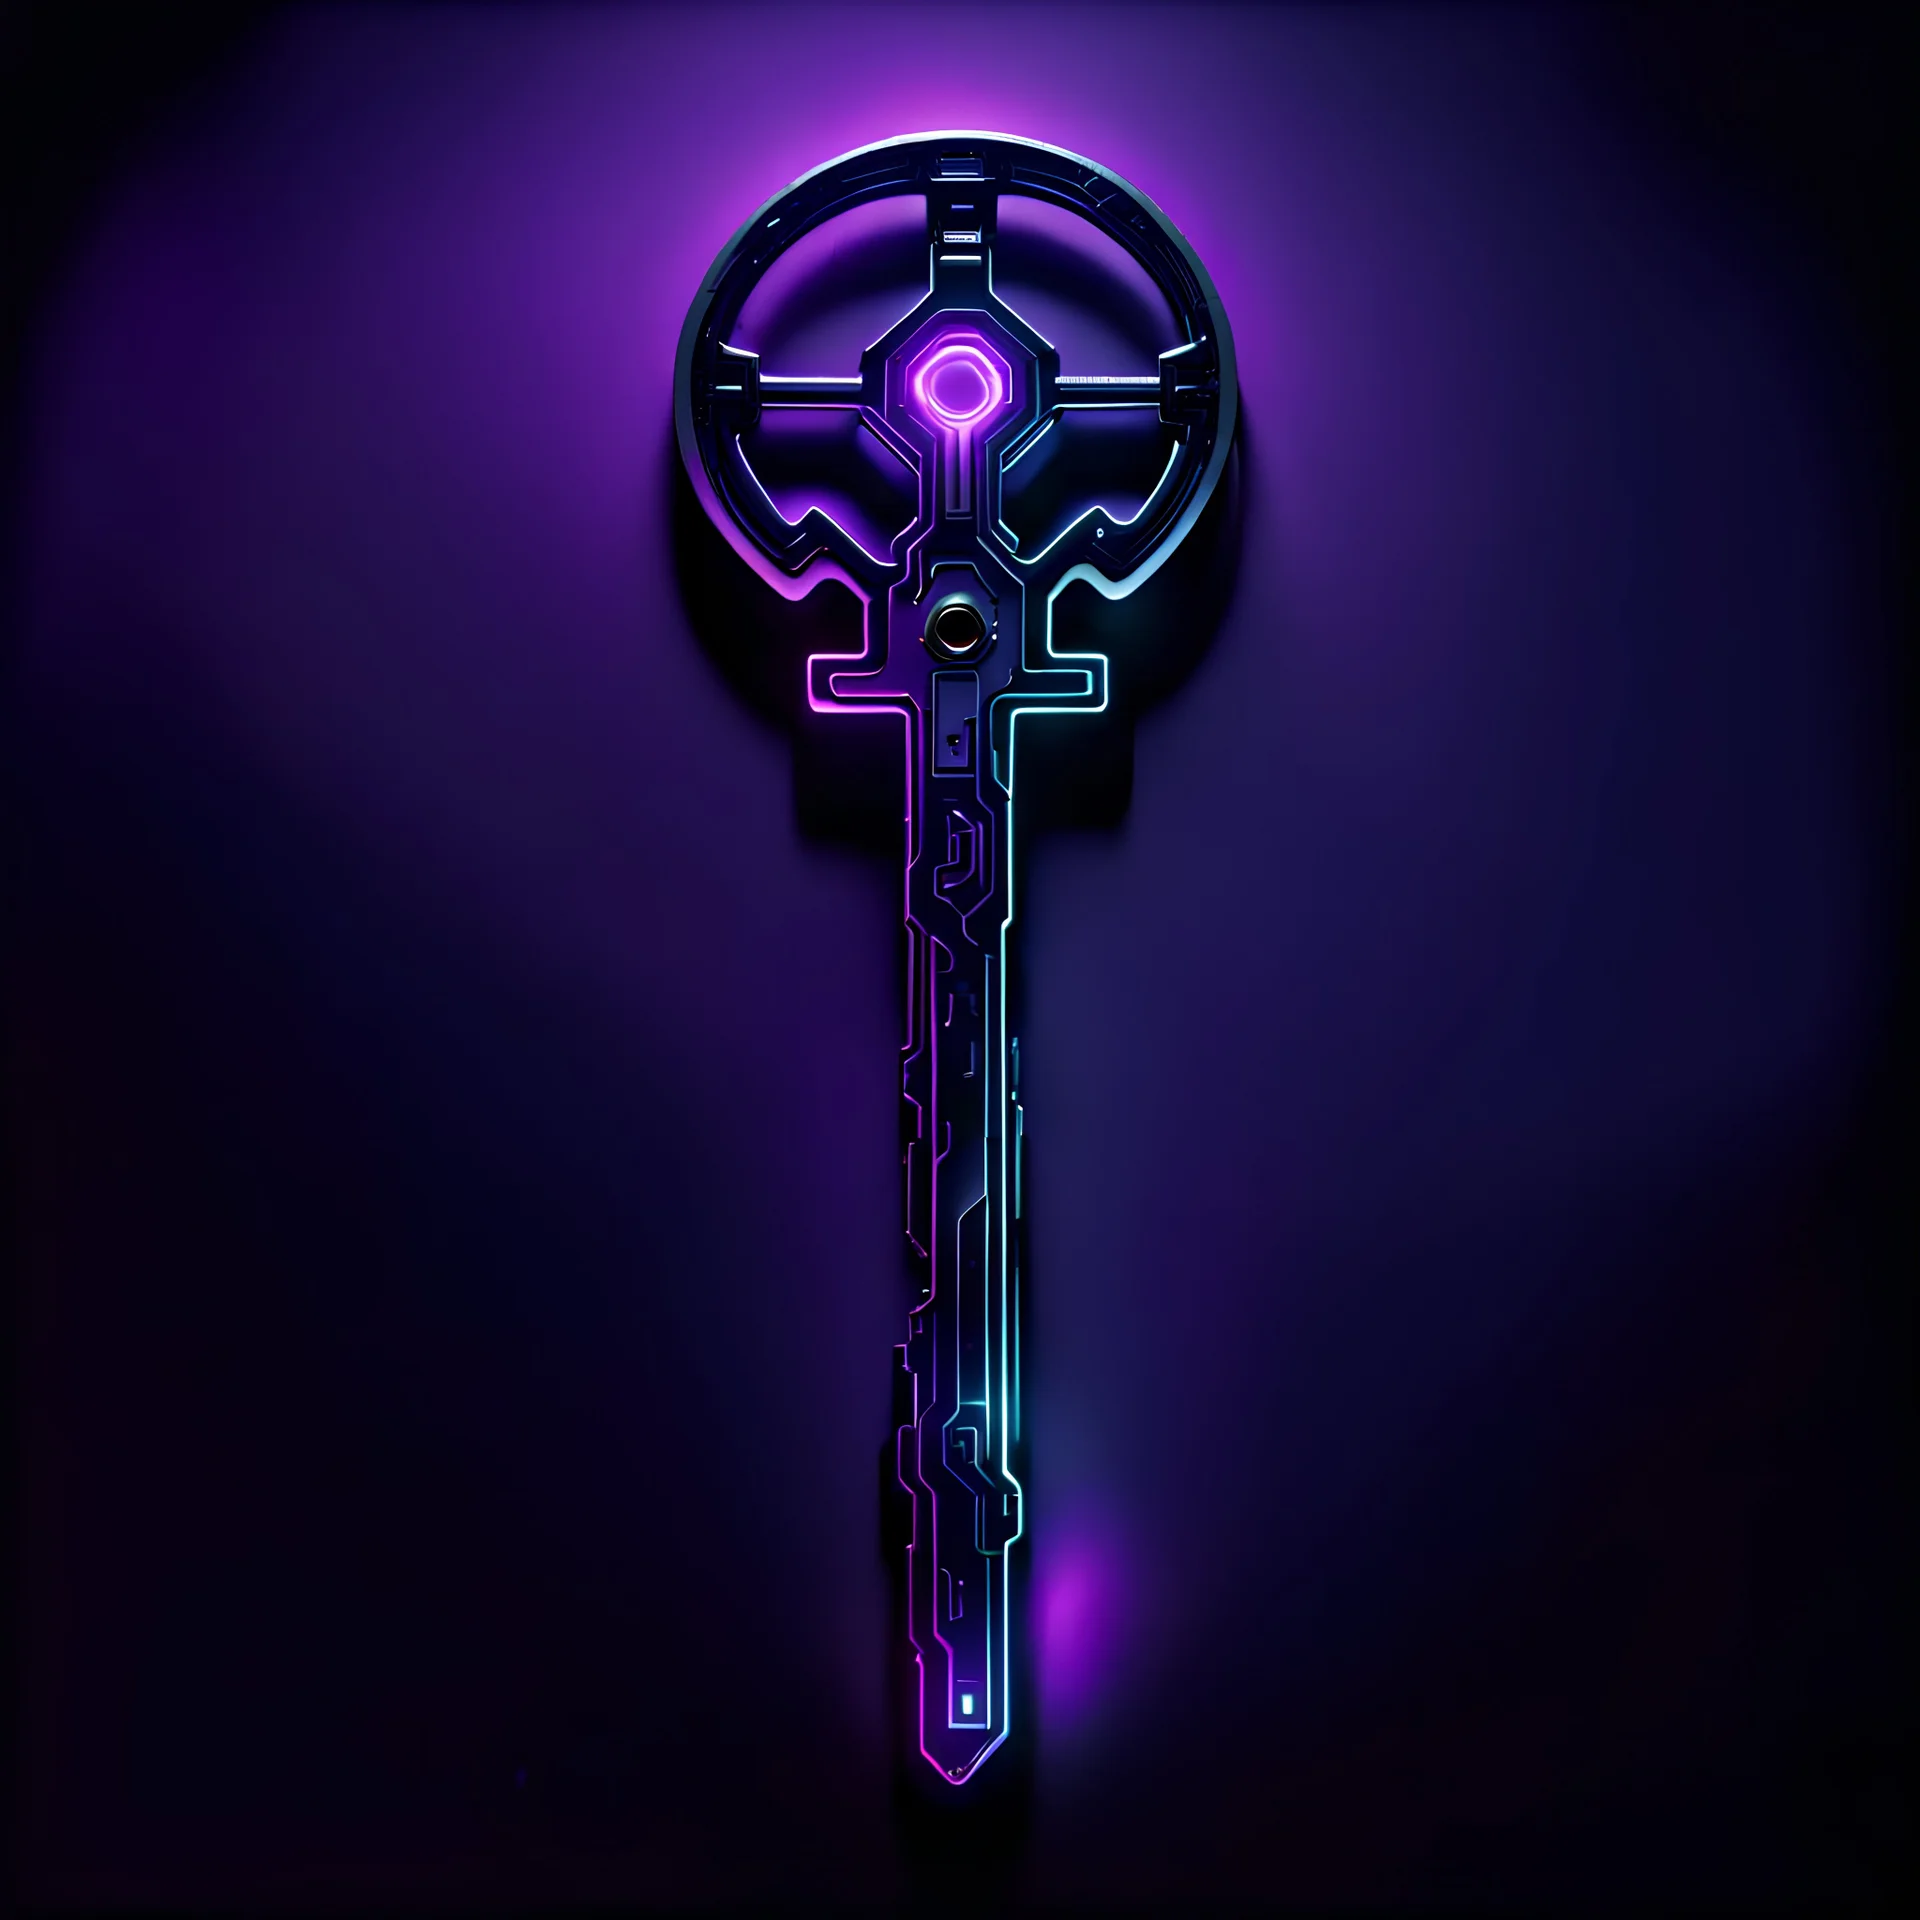 cyberpunk key, black background, purple lighting